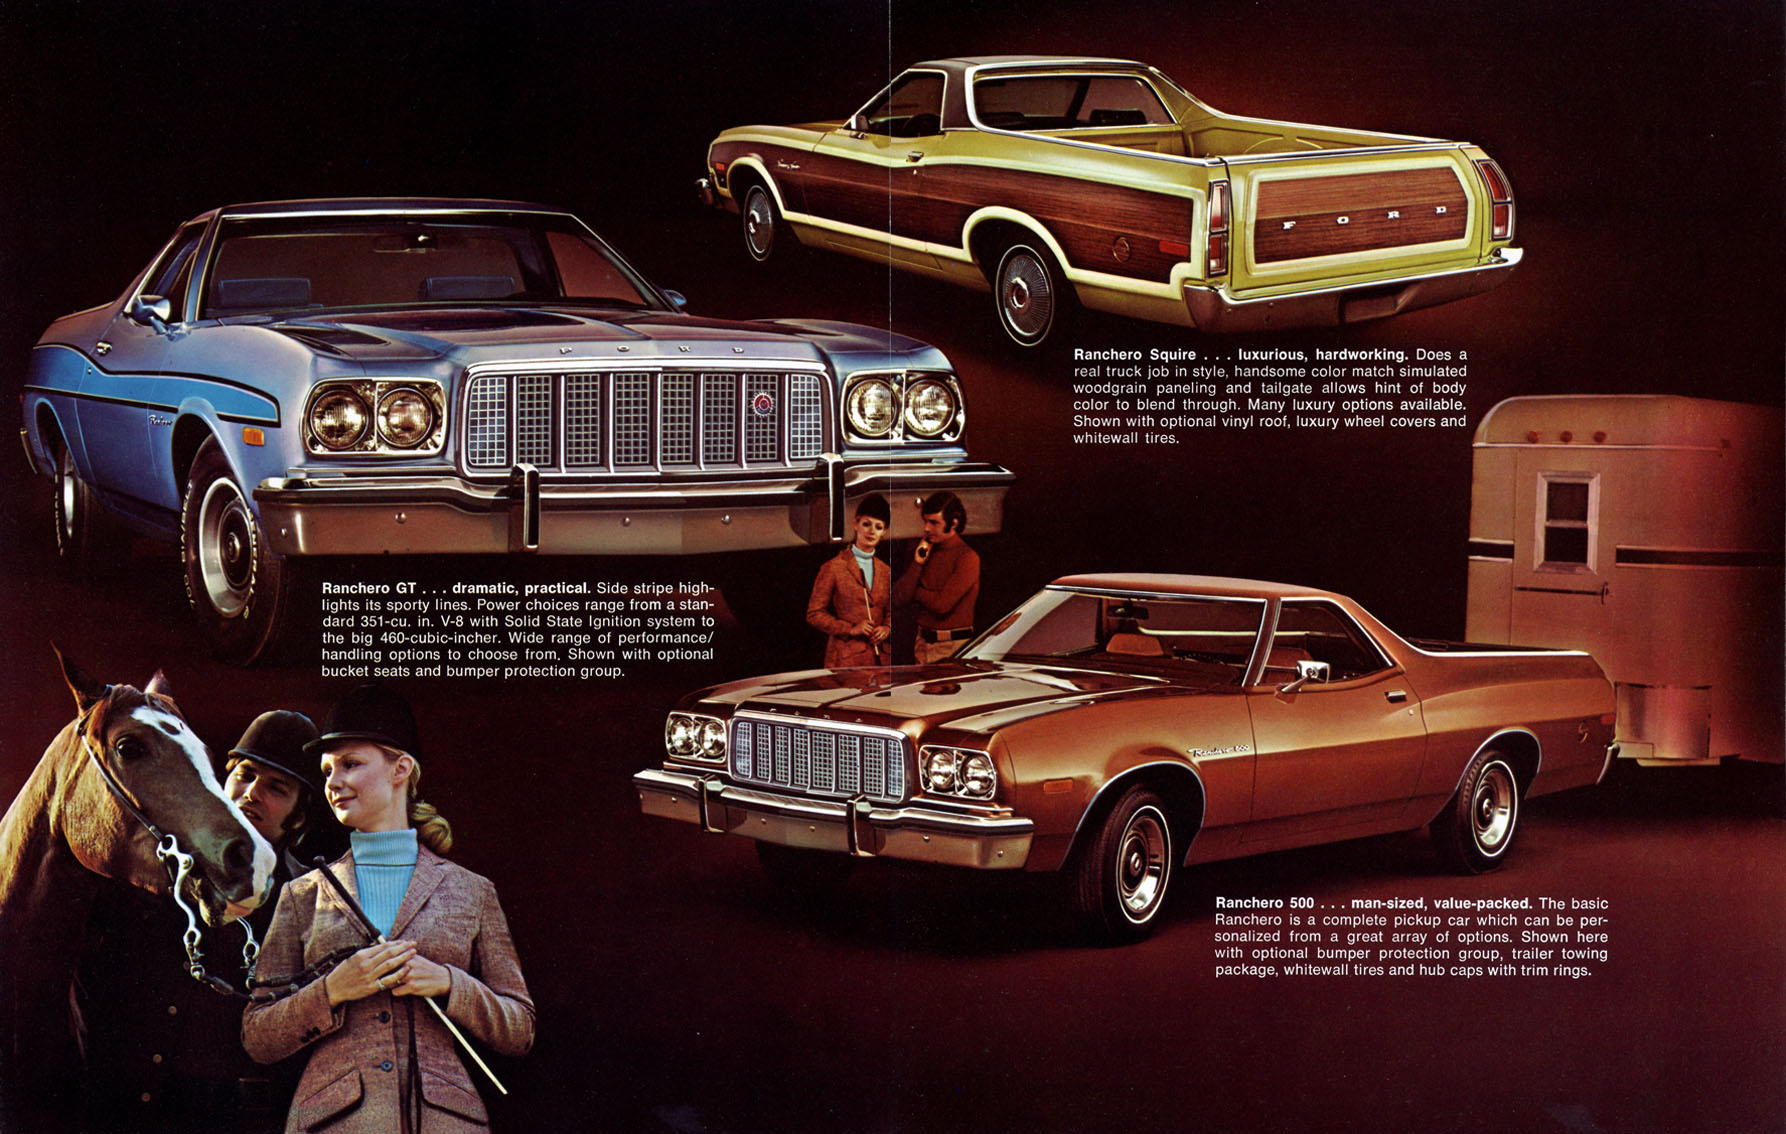 1975 Ford Ranchero HD wallpapers, Desktop wallpaper - most viewed